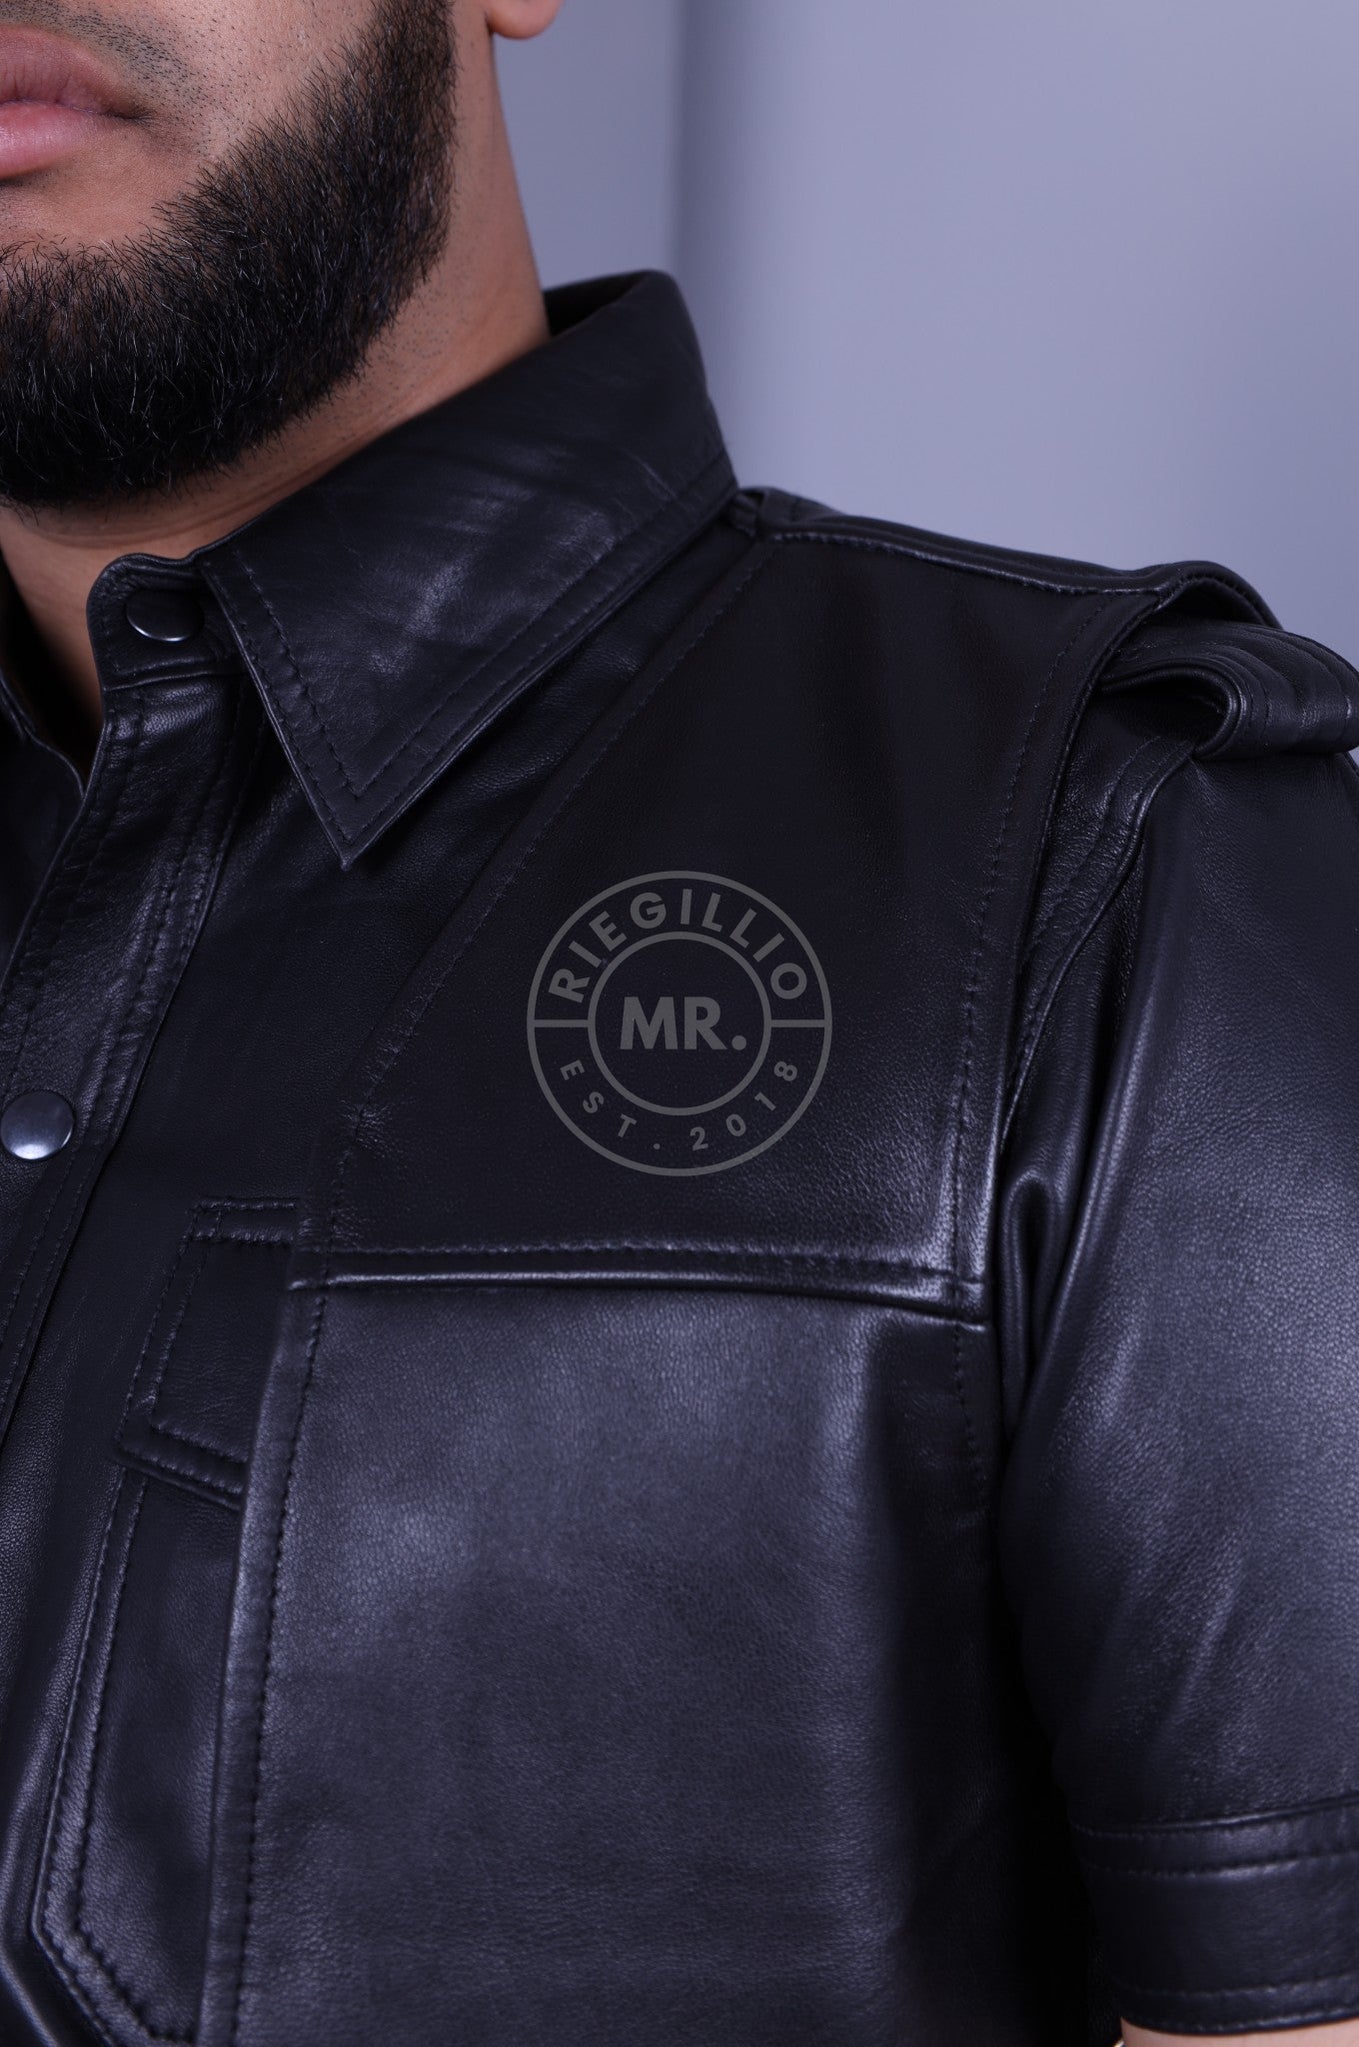 Black Leather Waistcoat - Lace Up at MR. Riegillio